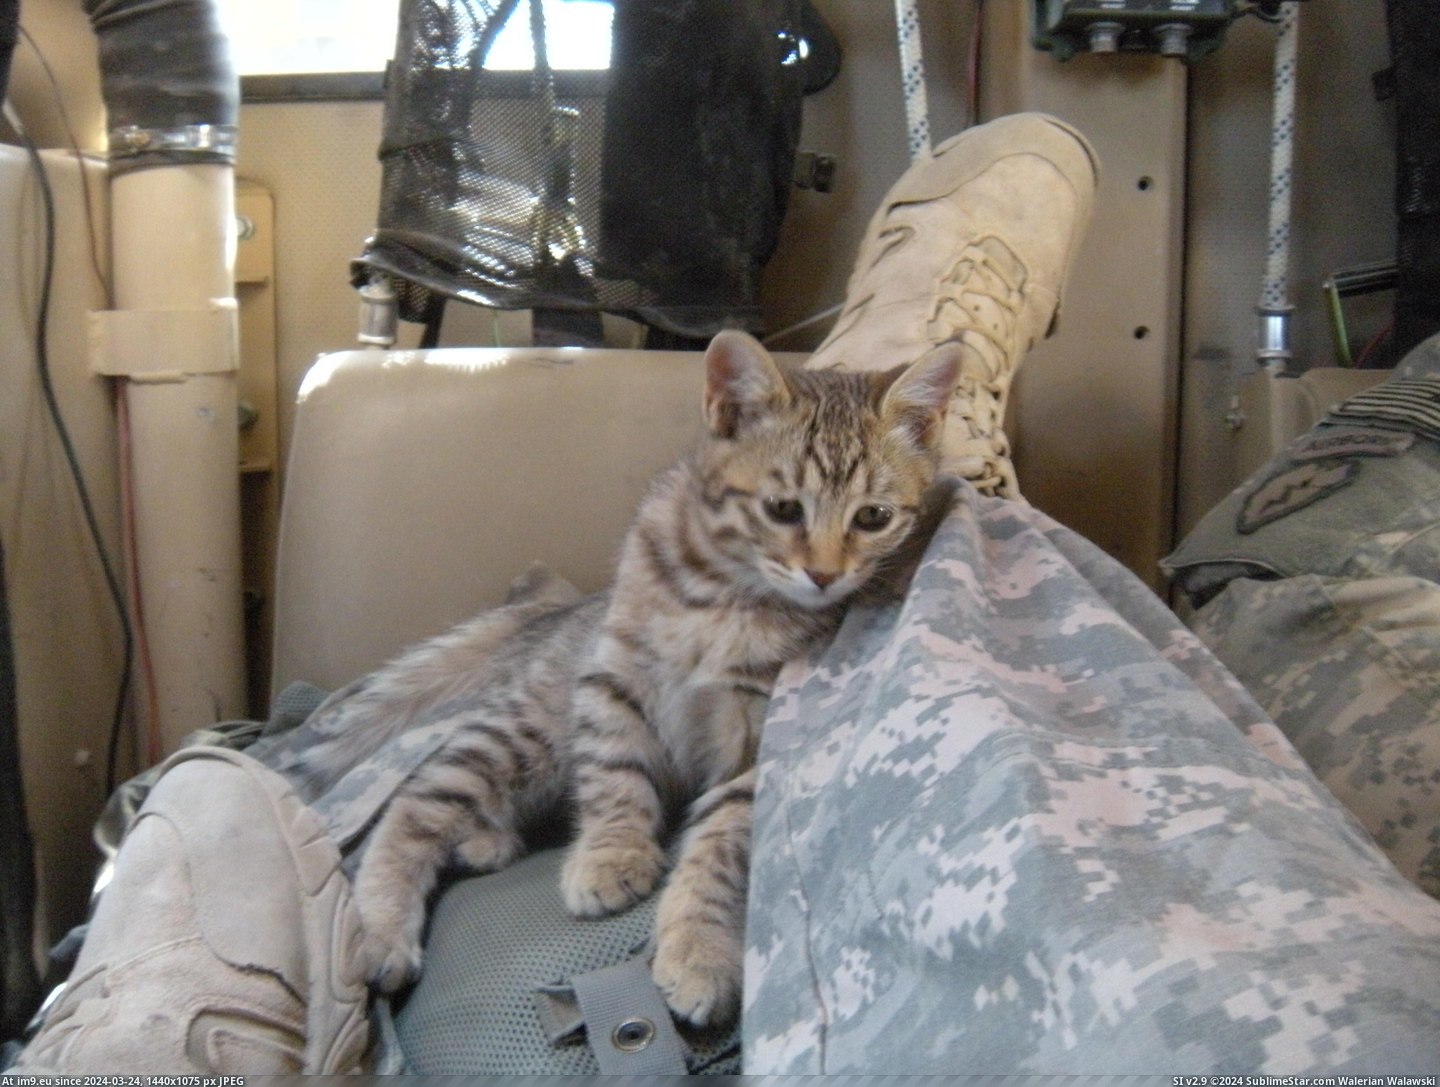 #Cats #You #Kitty #Veterans #Maxpro #Day #Present [Cats] Since it's Veterans day, I present to you...Maxpro kitty. 5 Pic. (Bild von album My r/CATS favs))